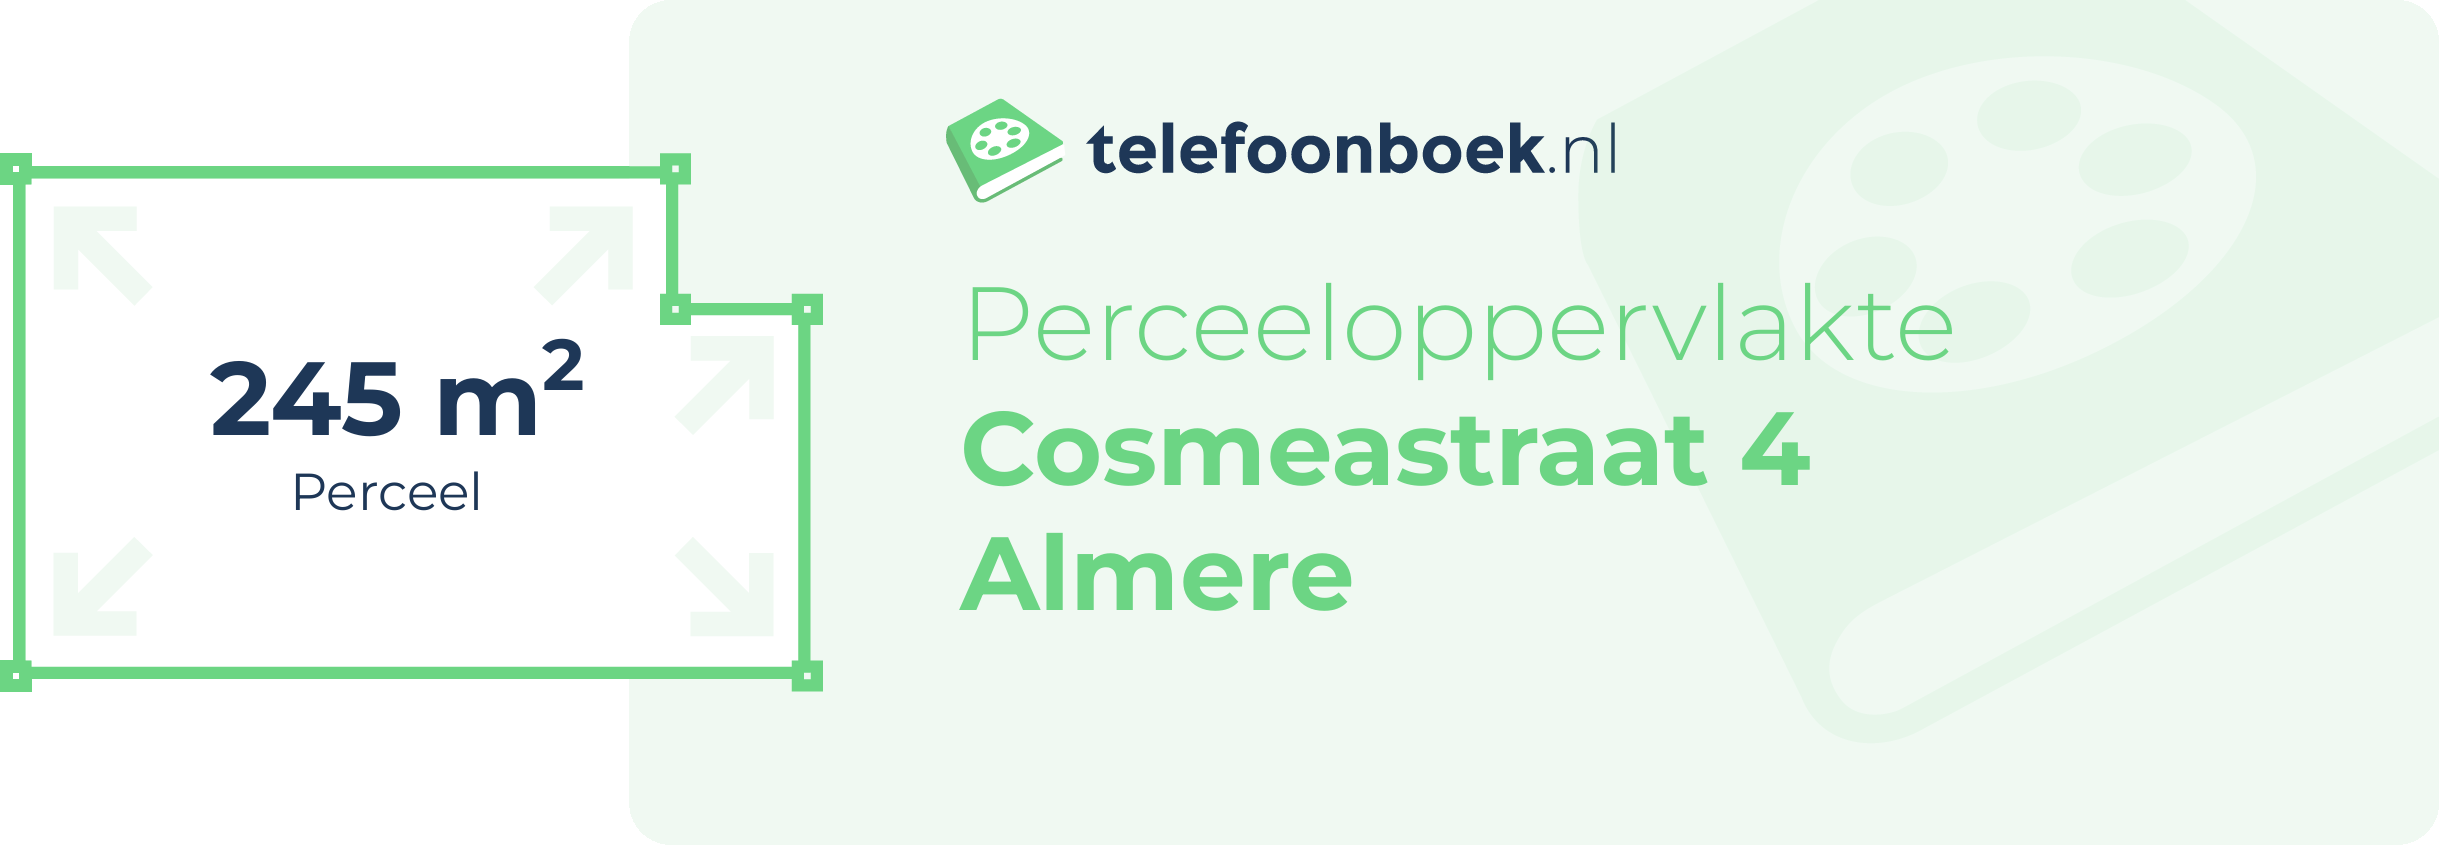 Perceeloppervlakte Cosmeastraat 4 Almere